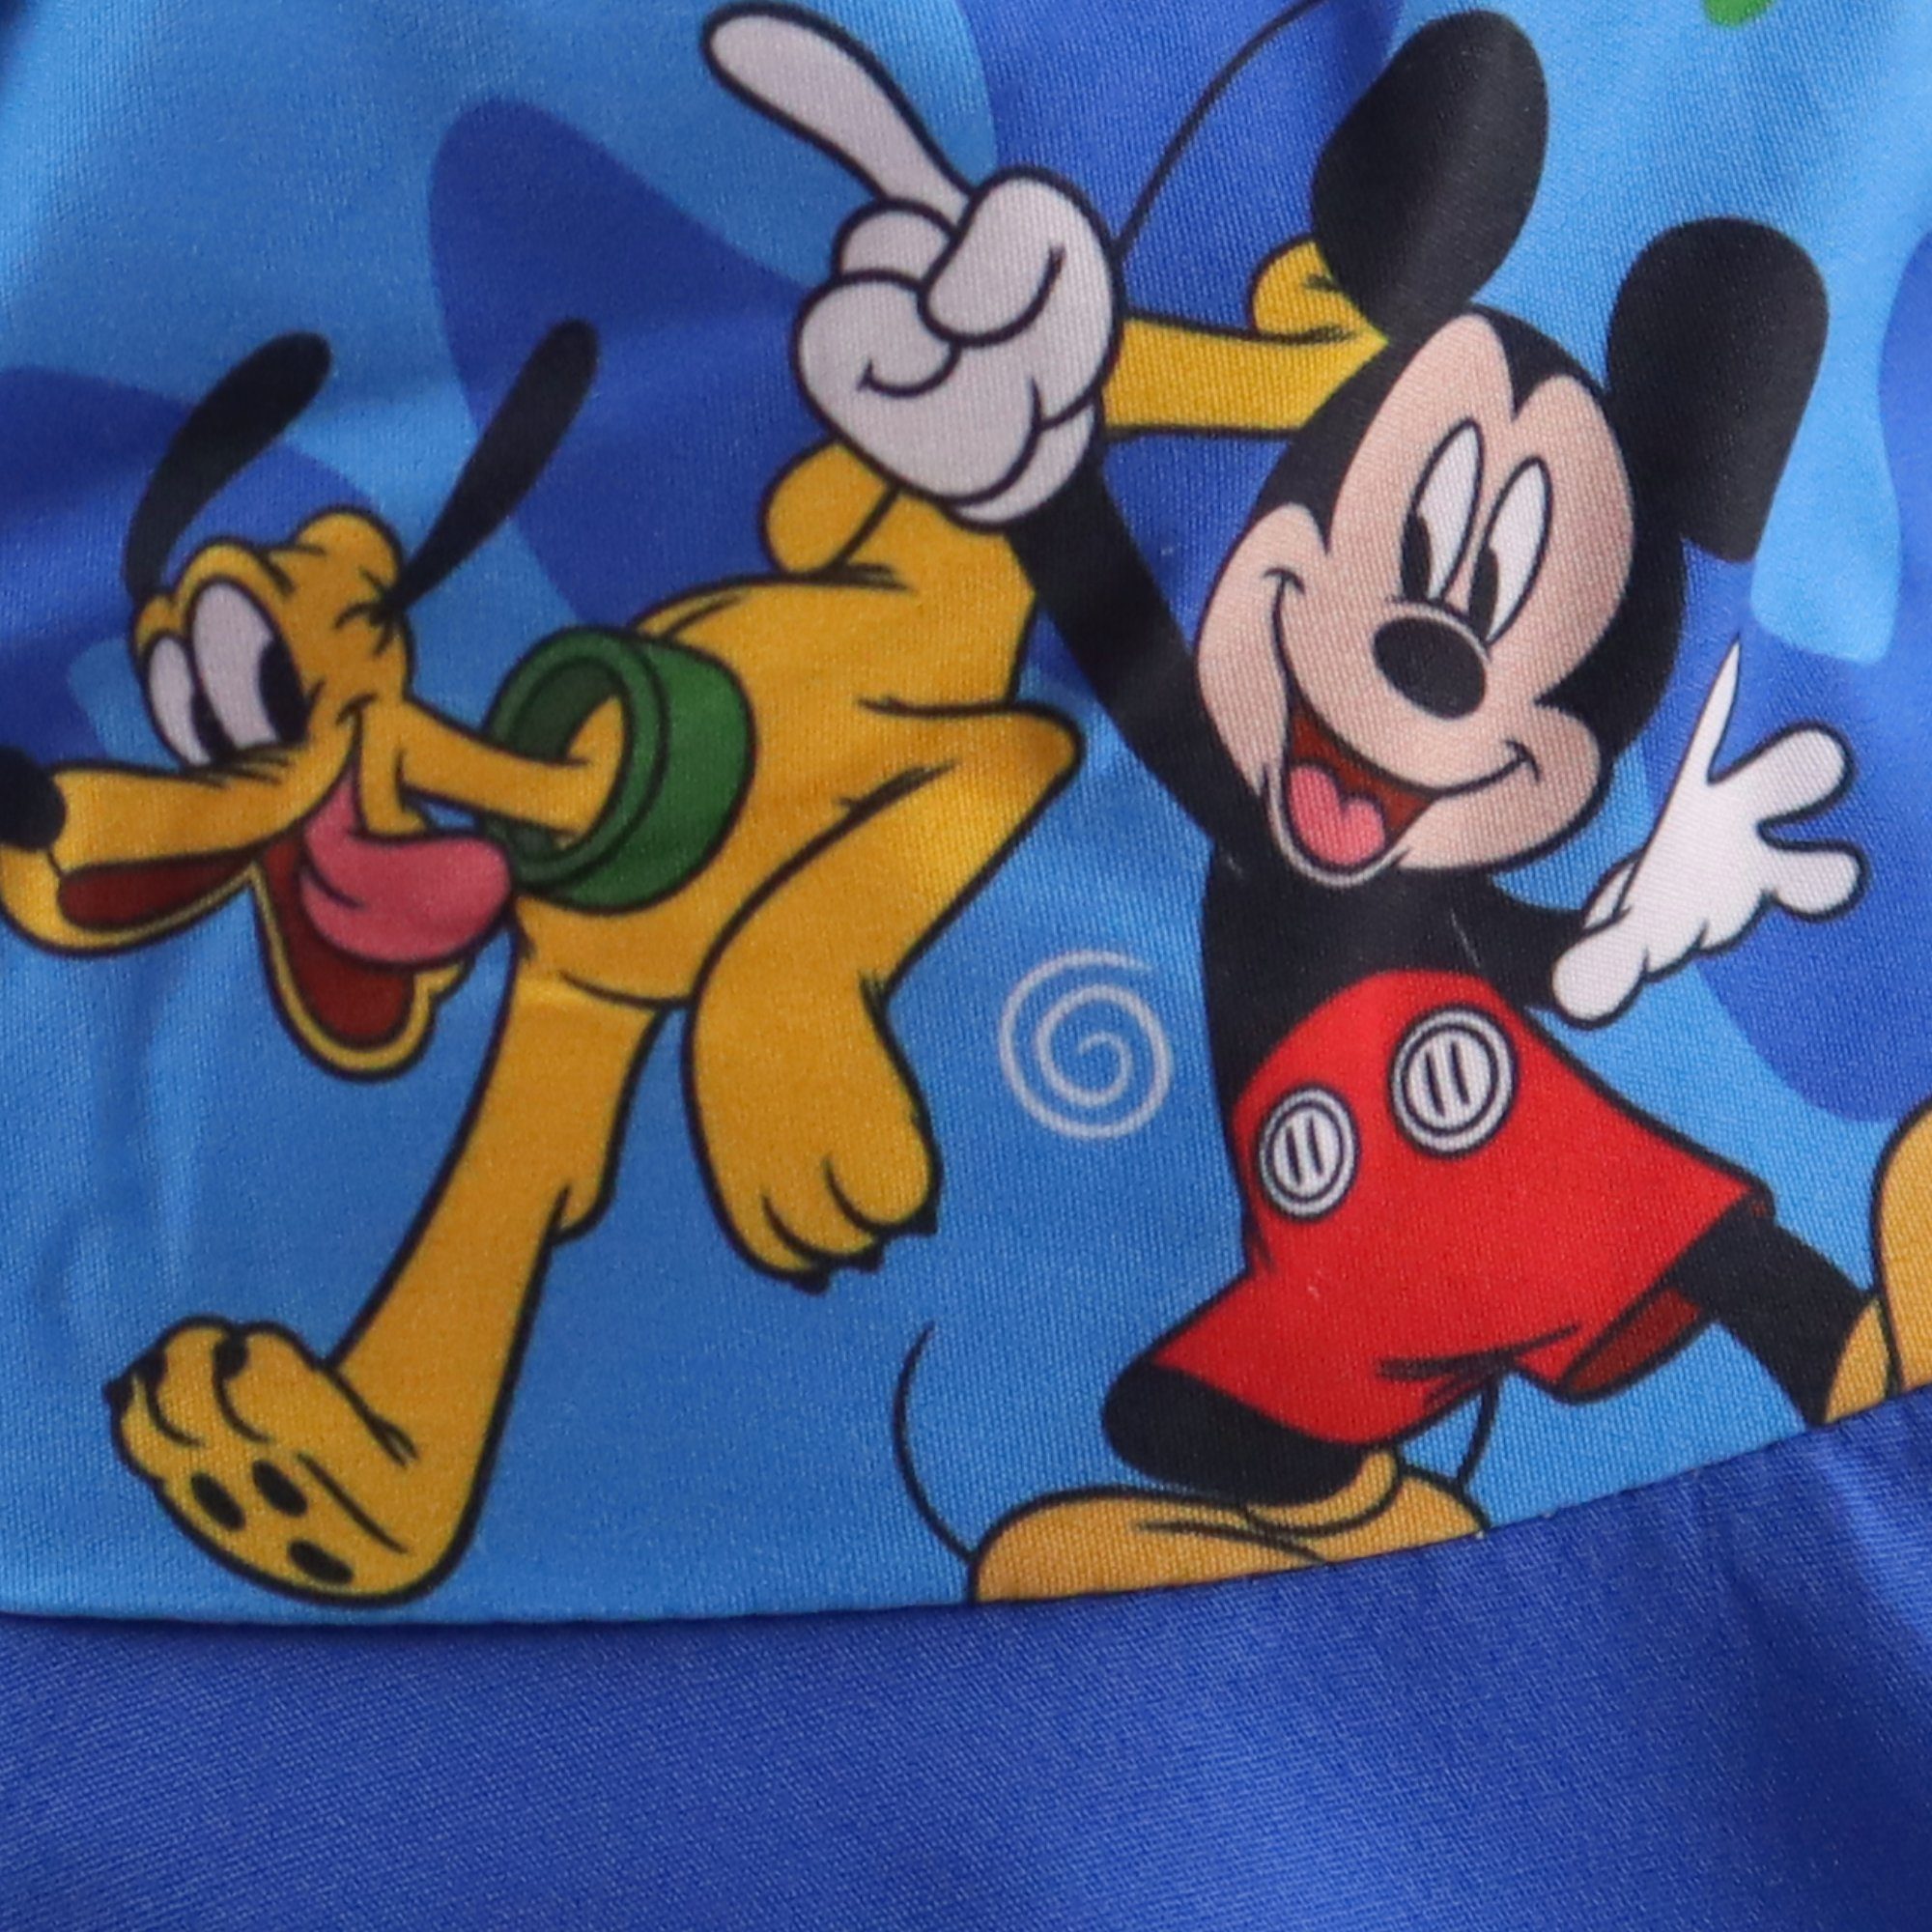 Gr. Maus Disney 54 Kinder Dunkelblau bis 52 Fischerhut Jungen Hut Mouse Micky Anglerhut Mickey